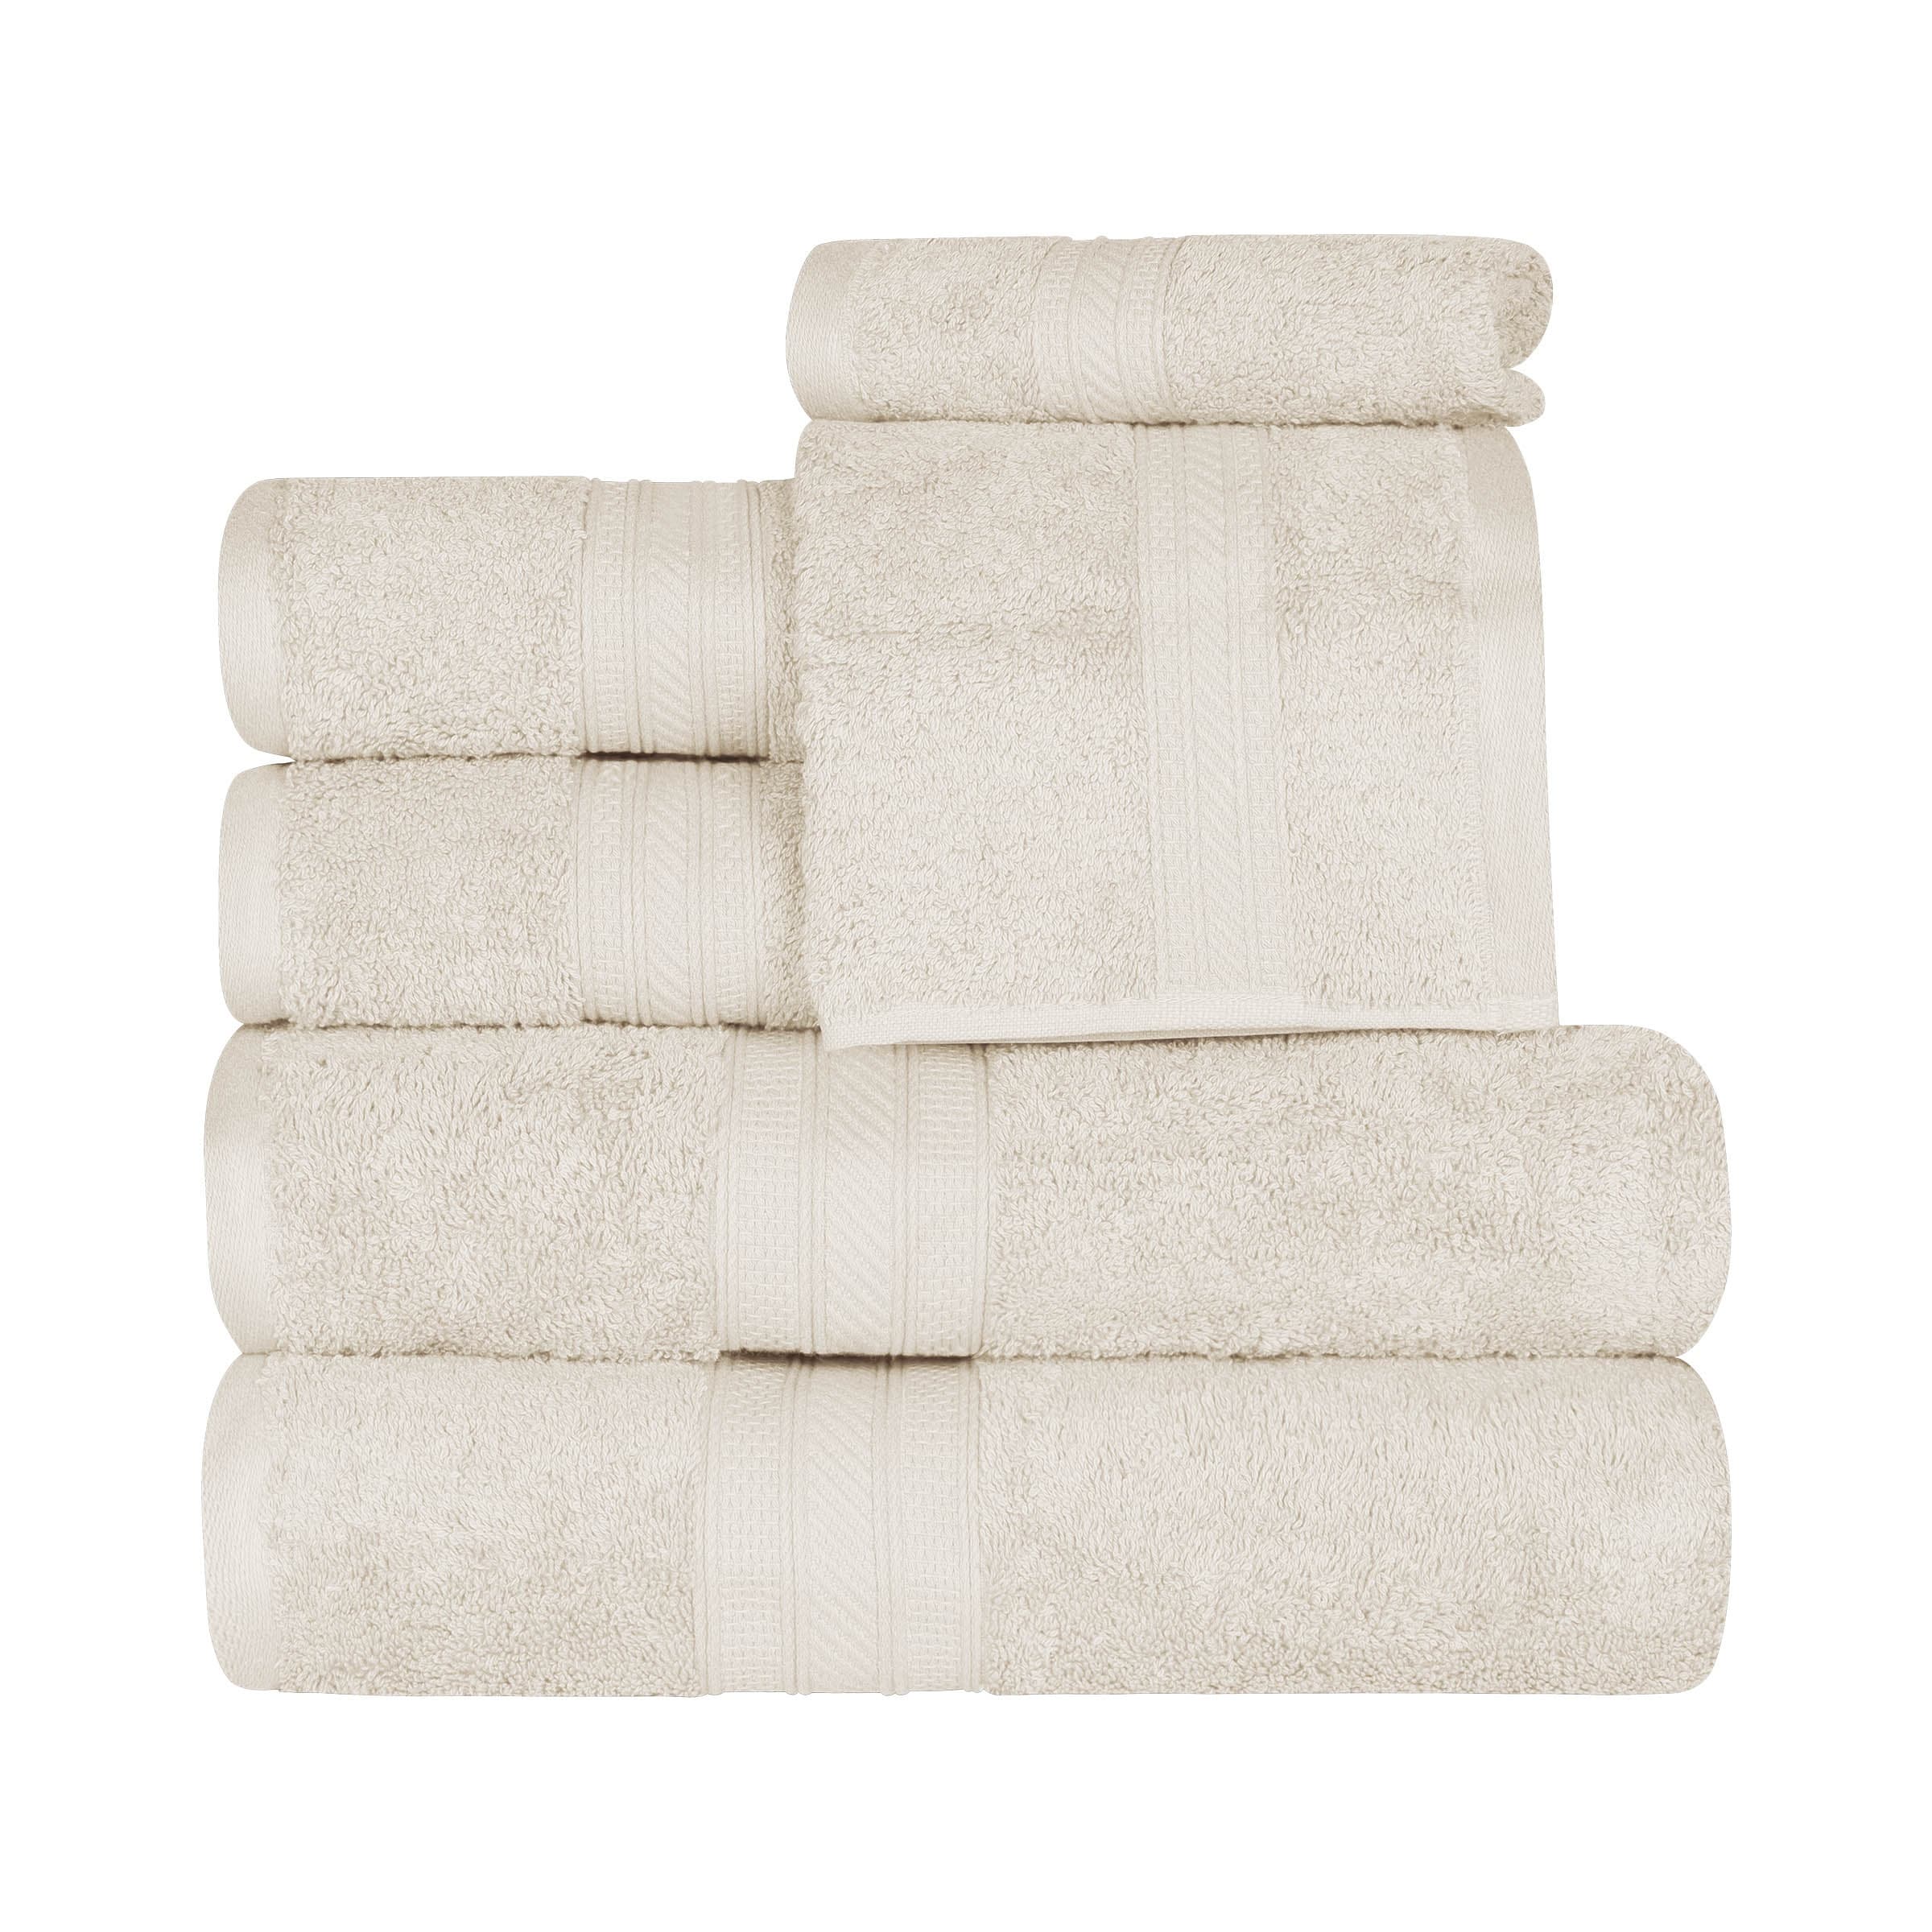 https://ak1.ostkcdn.com/images/products/is/images/direct/20512dd252fc0def12e2e235d16048046ffa644c/Miranda-Haus-6-piece-Plush-Long-Staple-Combed-Cotton-Towel-Set.jpg